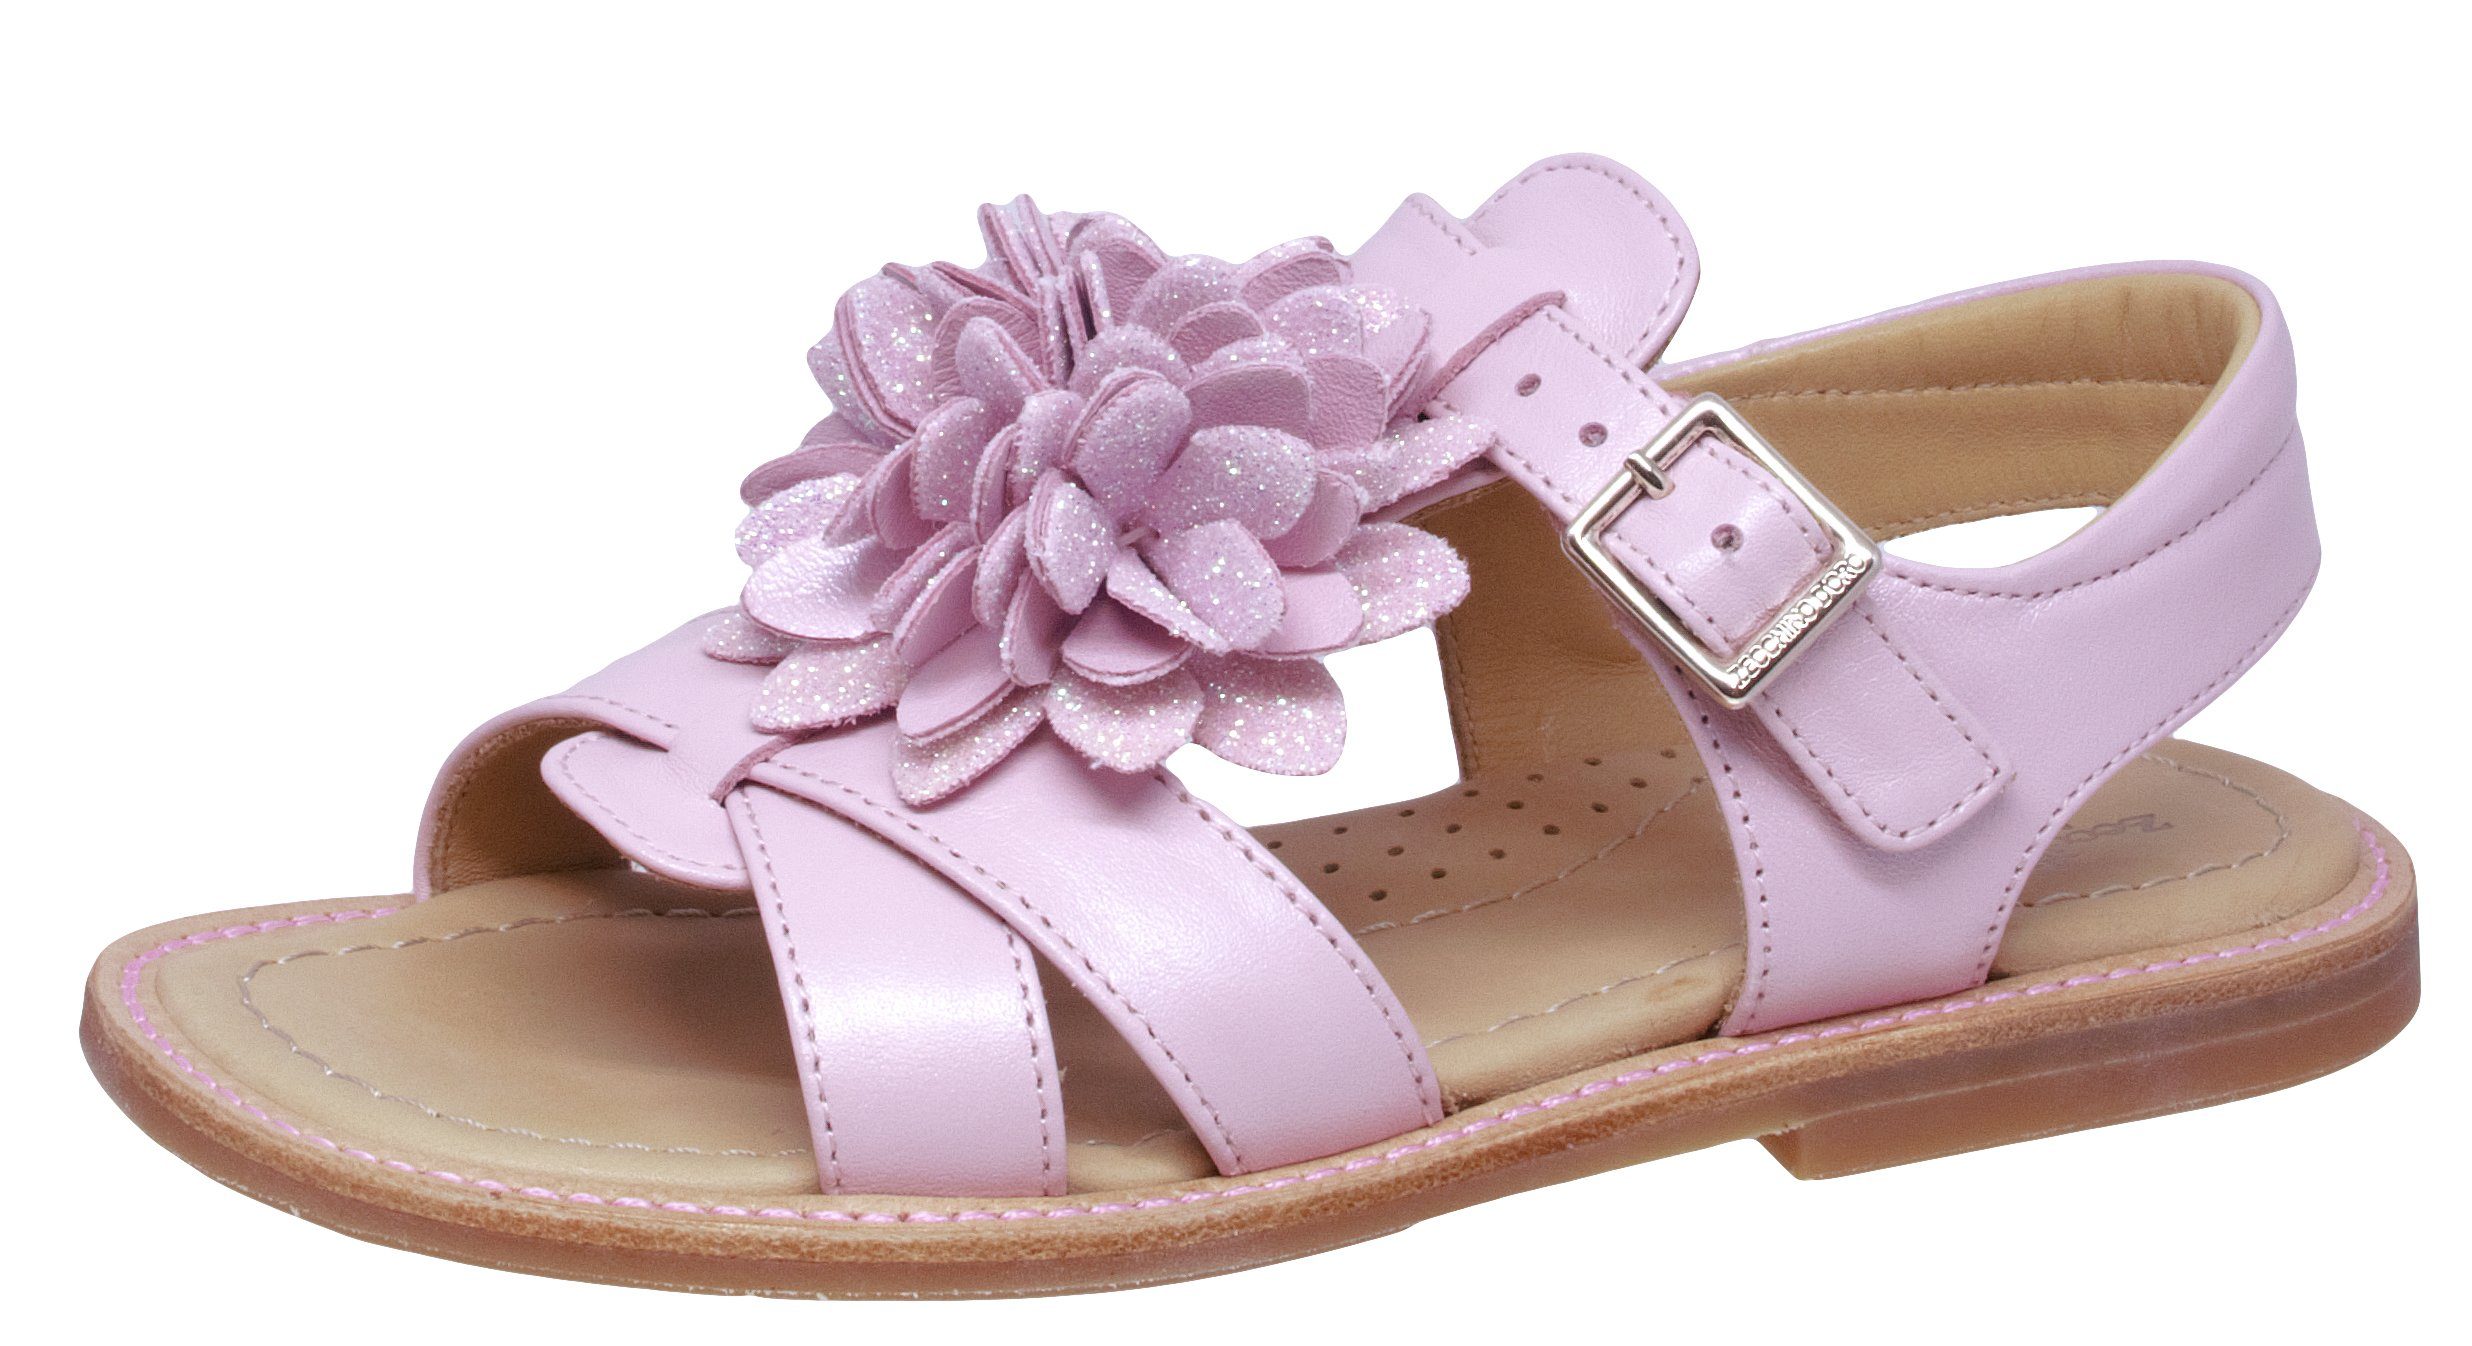 Zecchino d'Oro »A21 1954 offene Sandalen Blume Applikation Rosa« Sandalette  online kaufen | OTTO